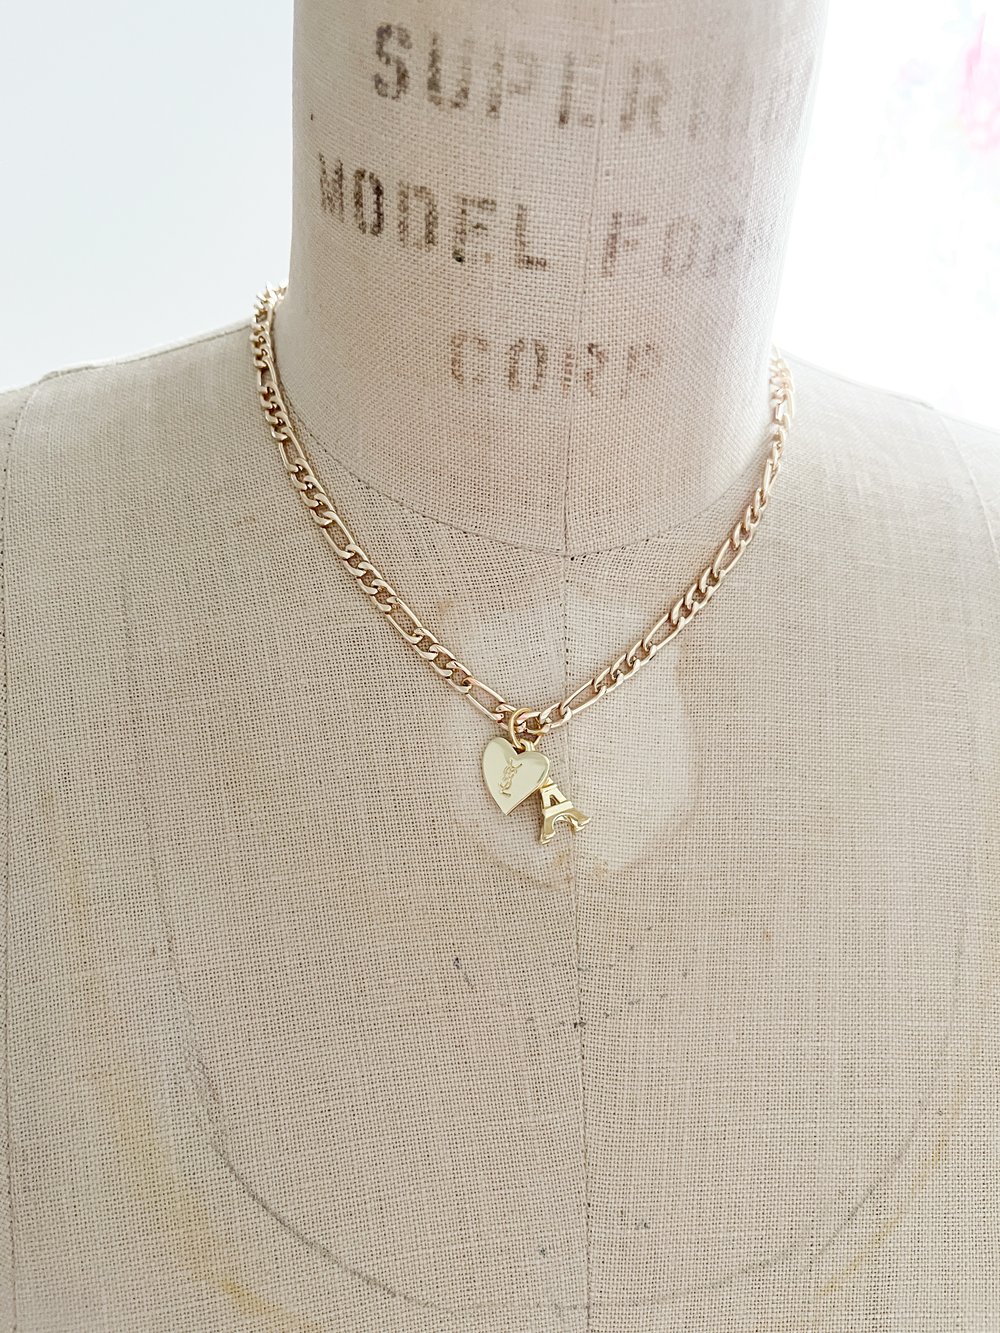 Yves Saint Laurent / Reworked jewelry